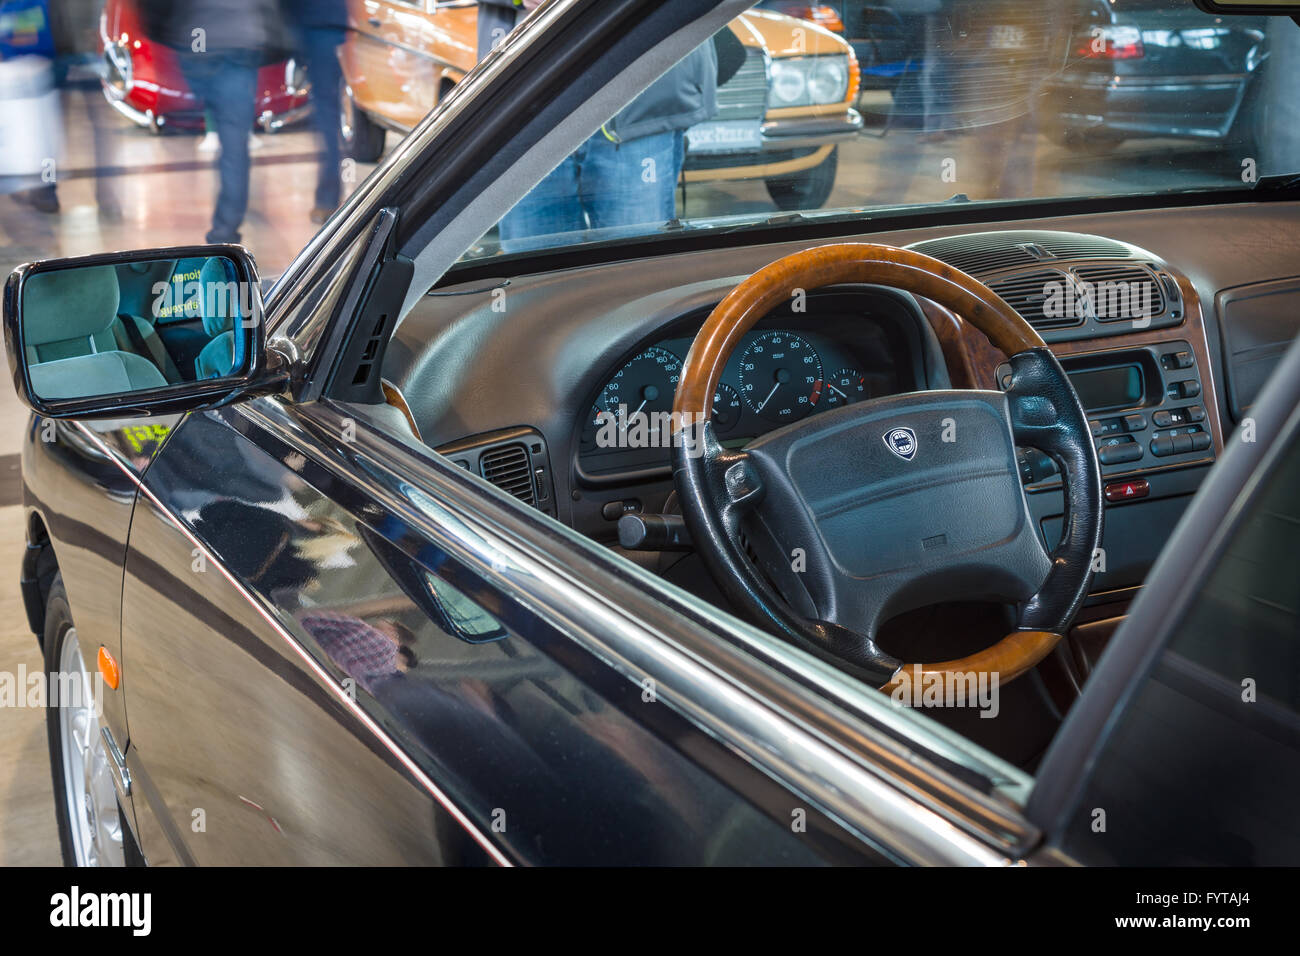 Lancia kappa hi-res stock photography and images - Alamy